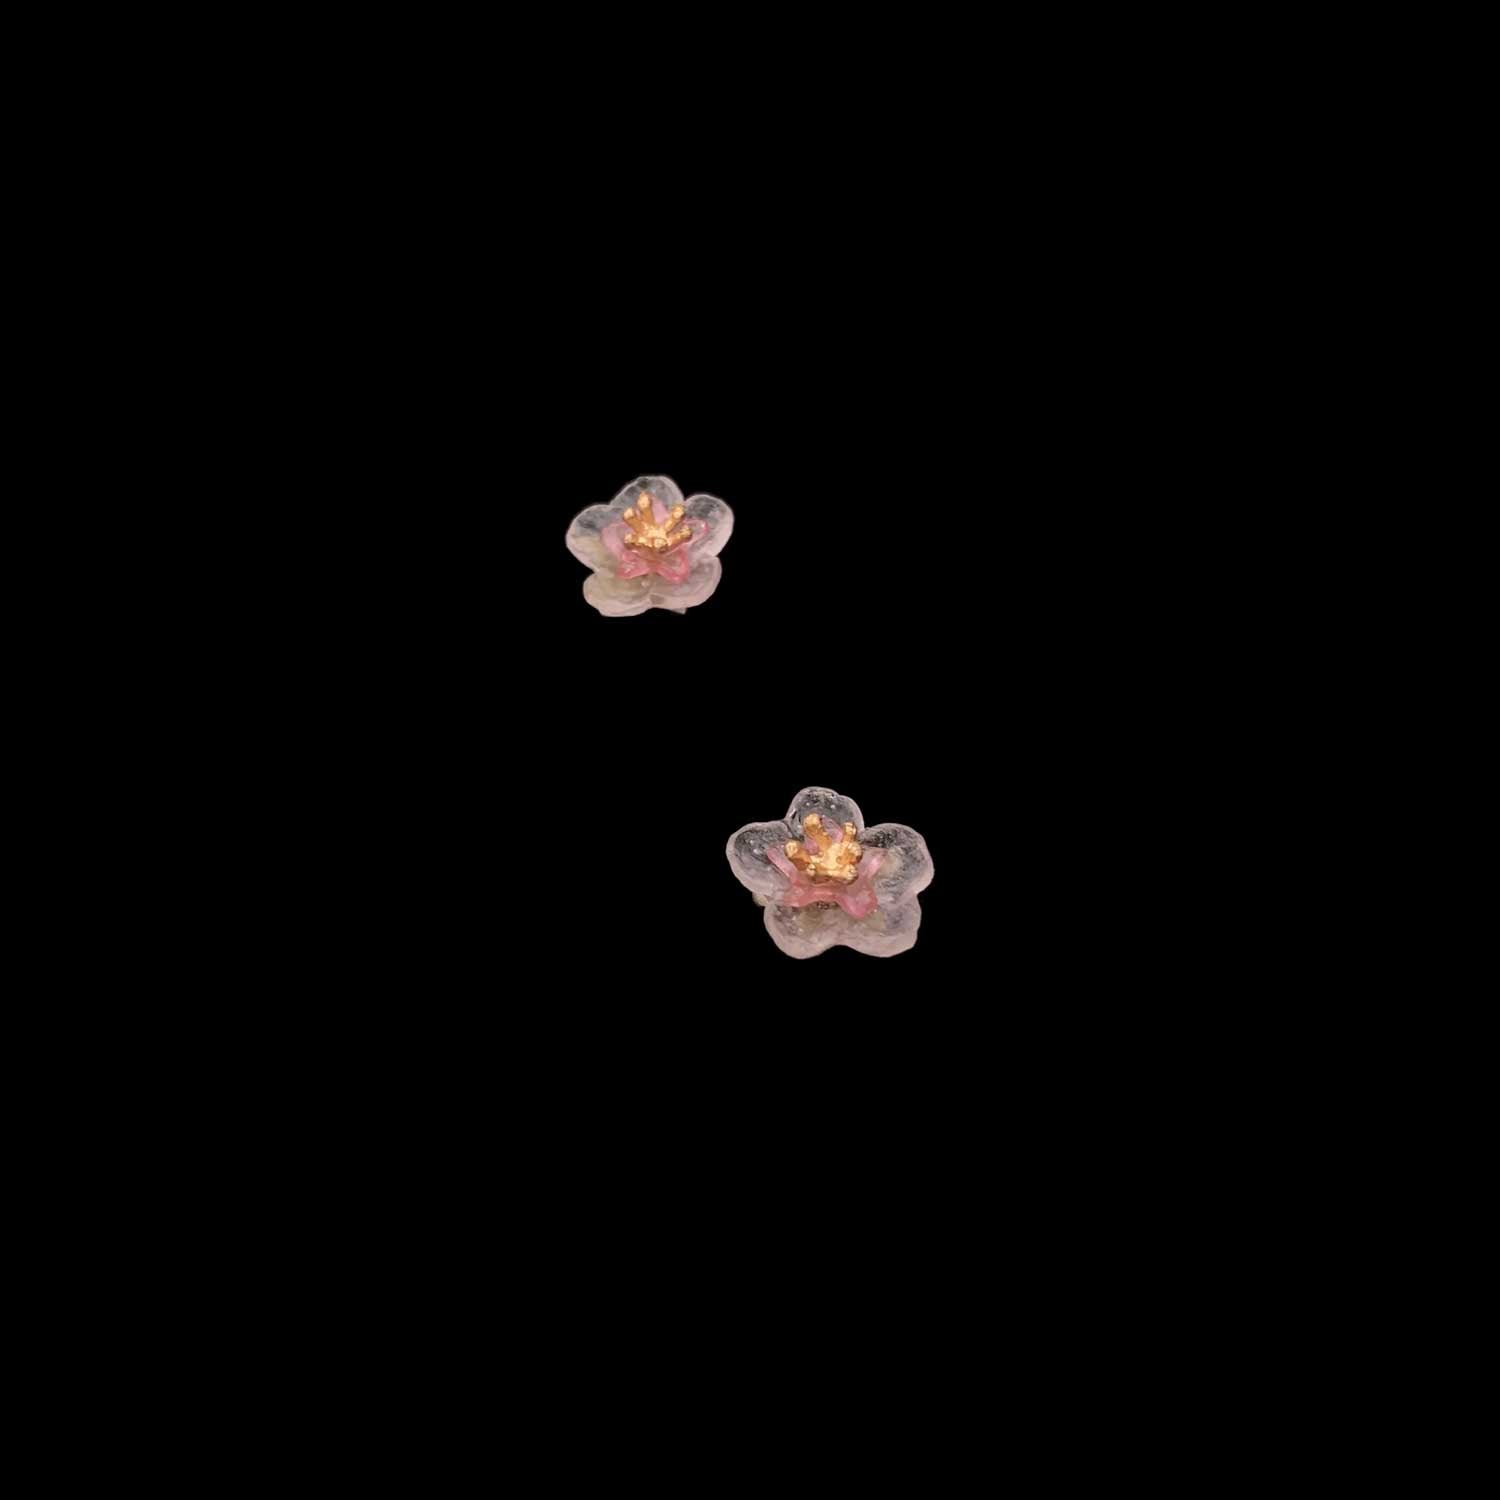 Peach Blossom Earrings - Dainty Post